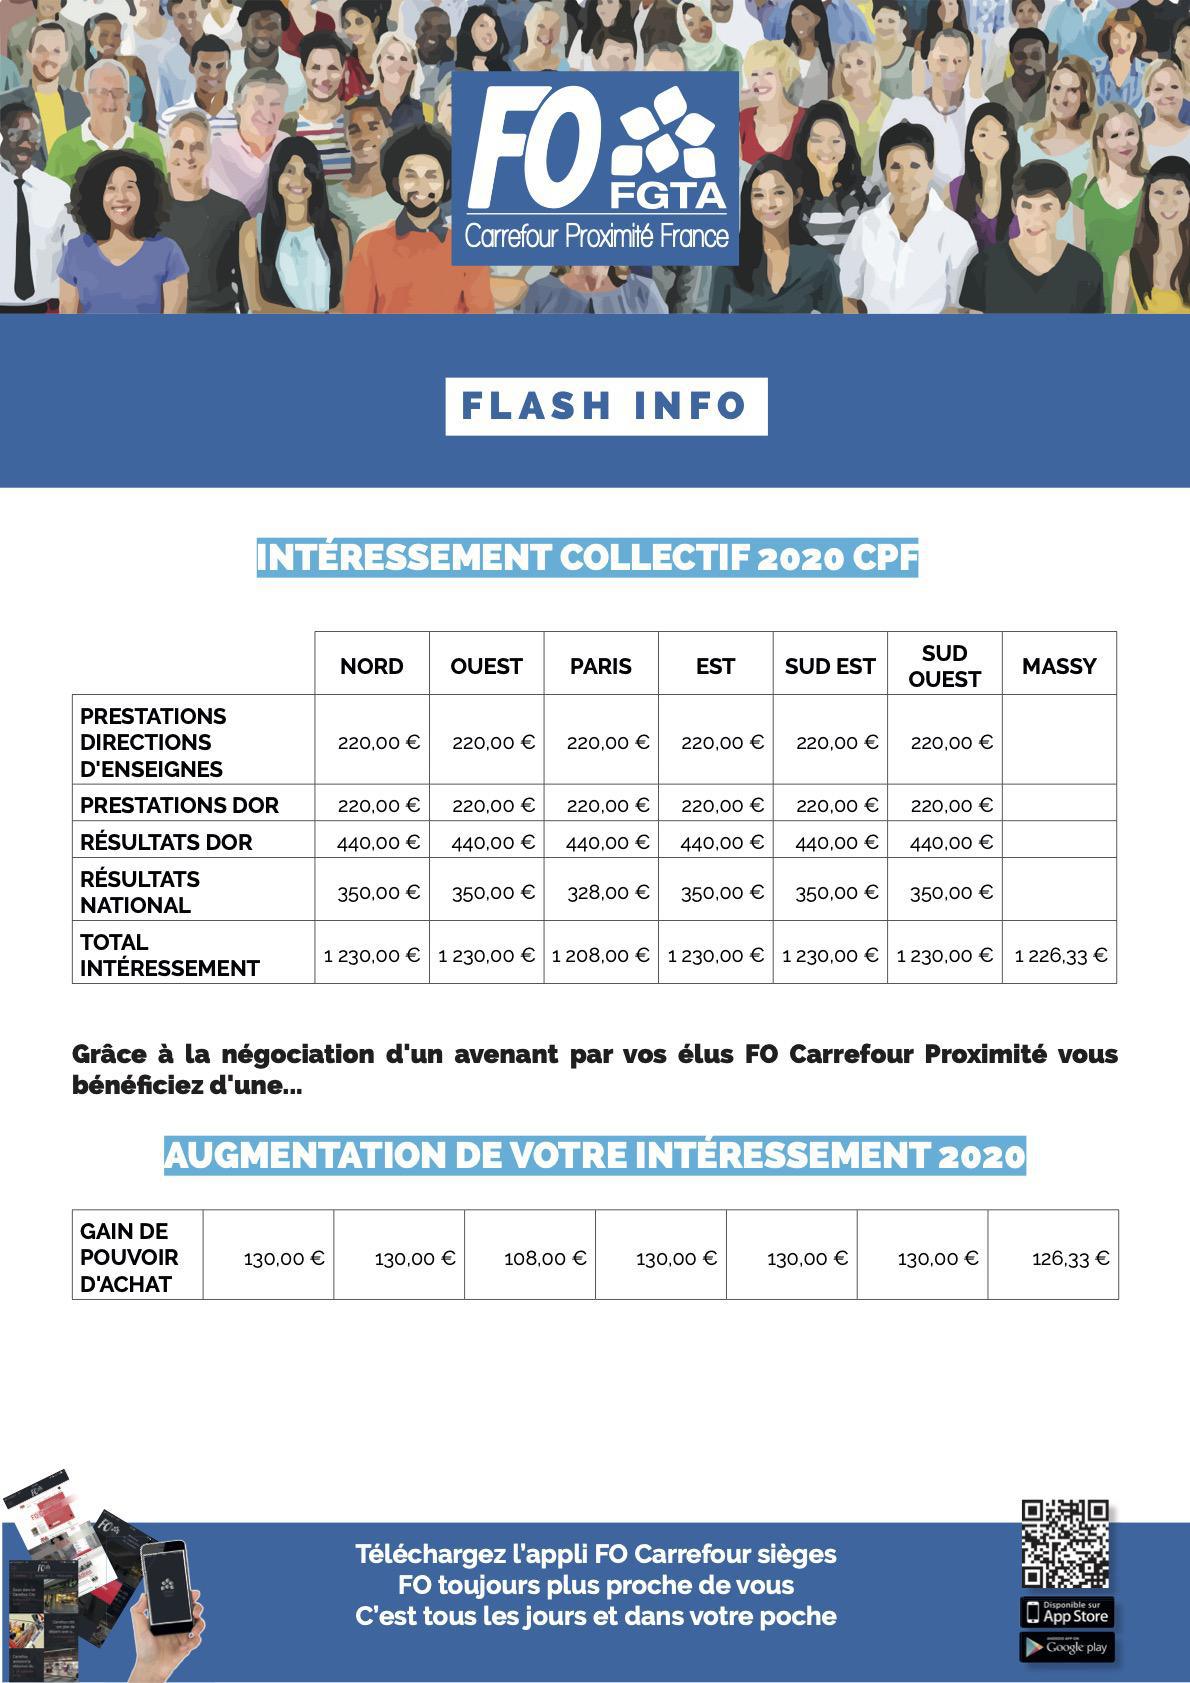 Flash Info: Intéressement Collectif 2020 CPF!